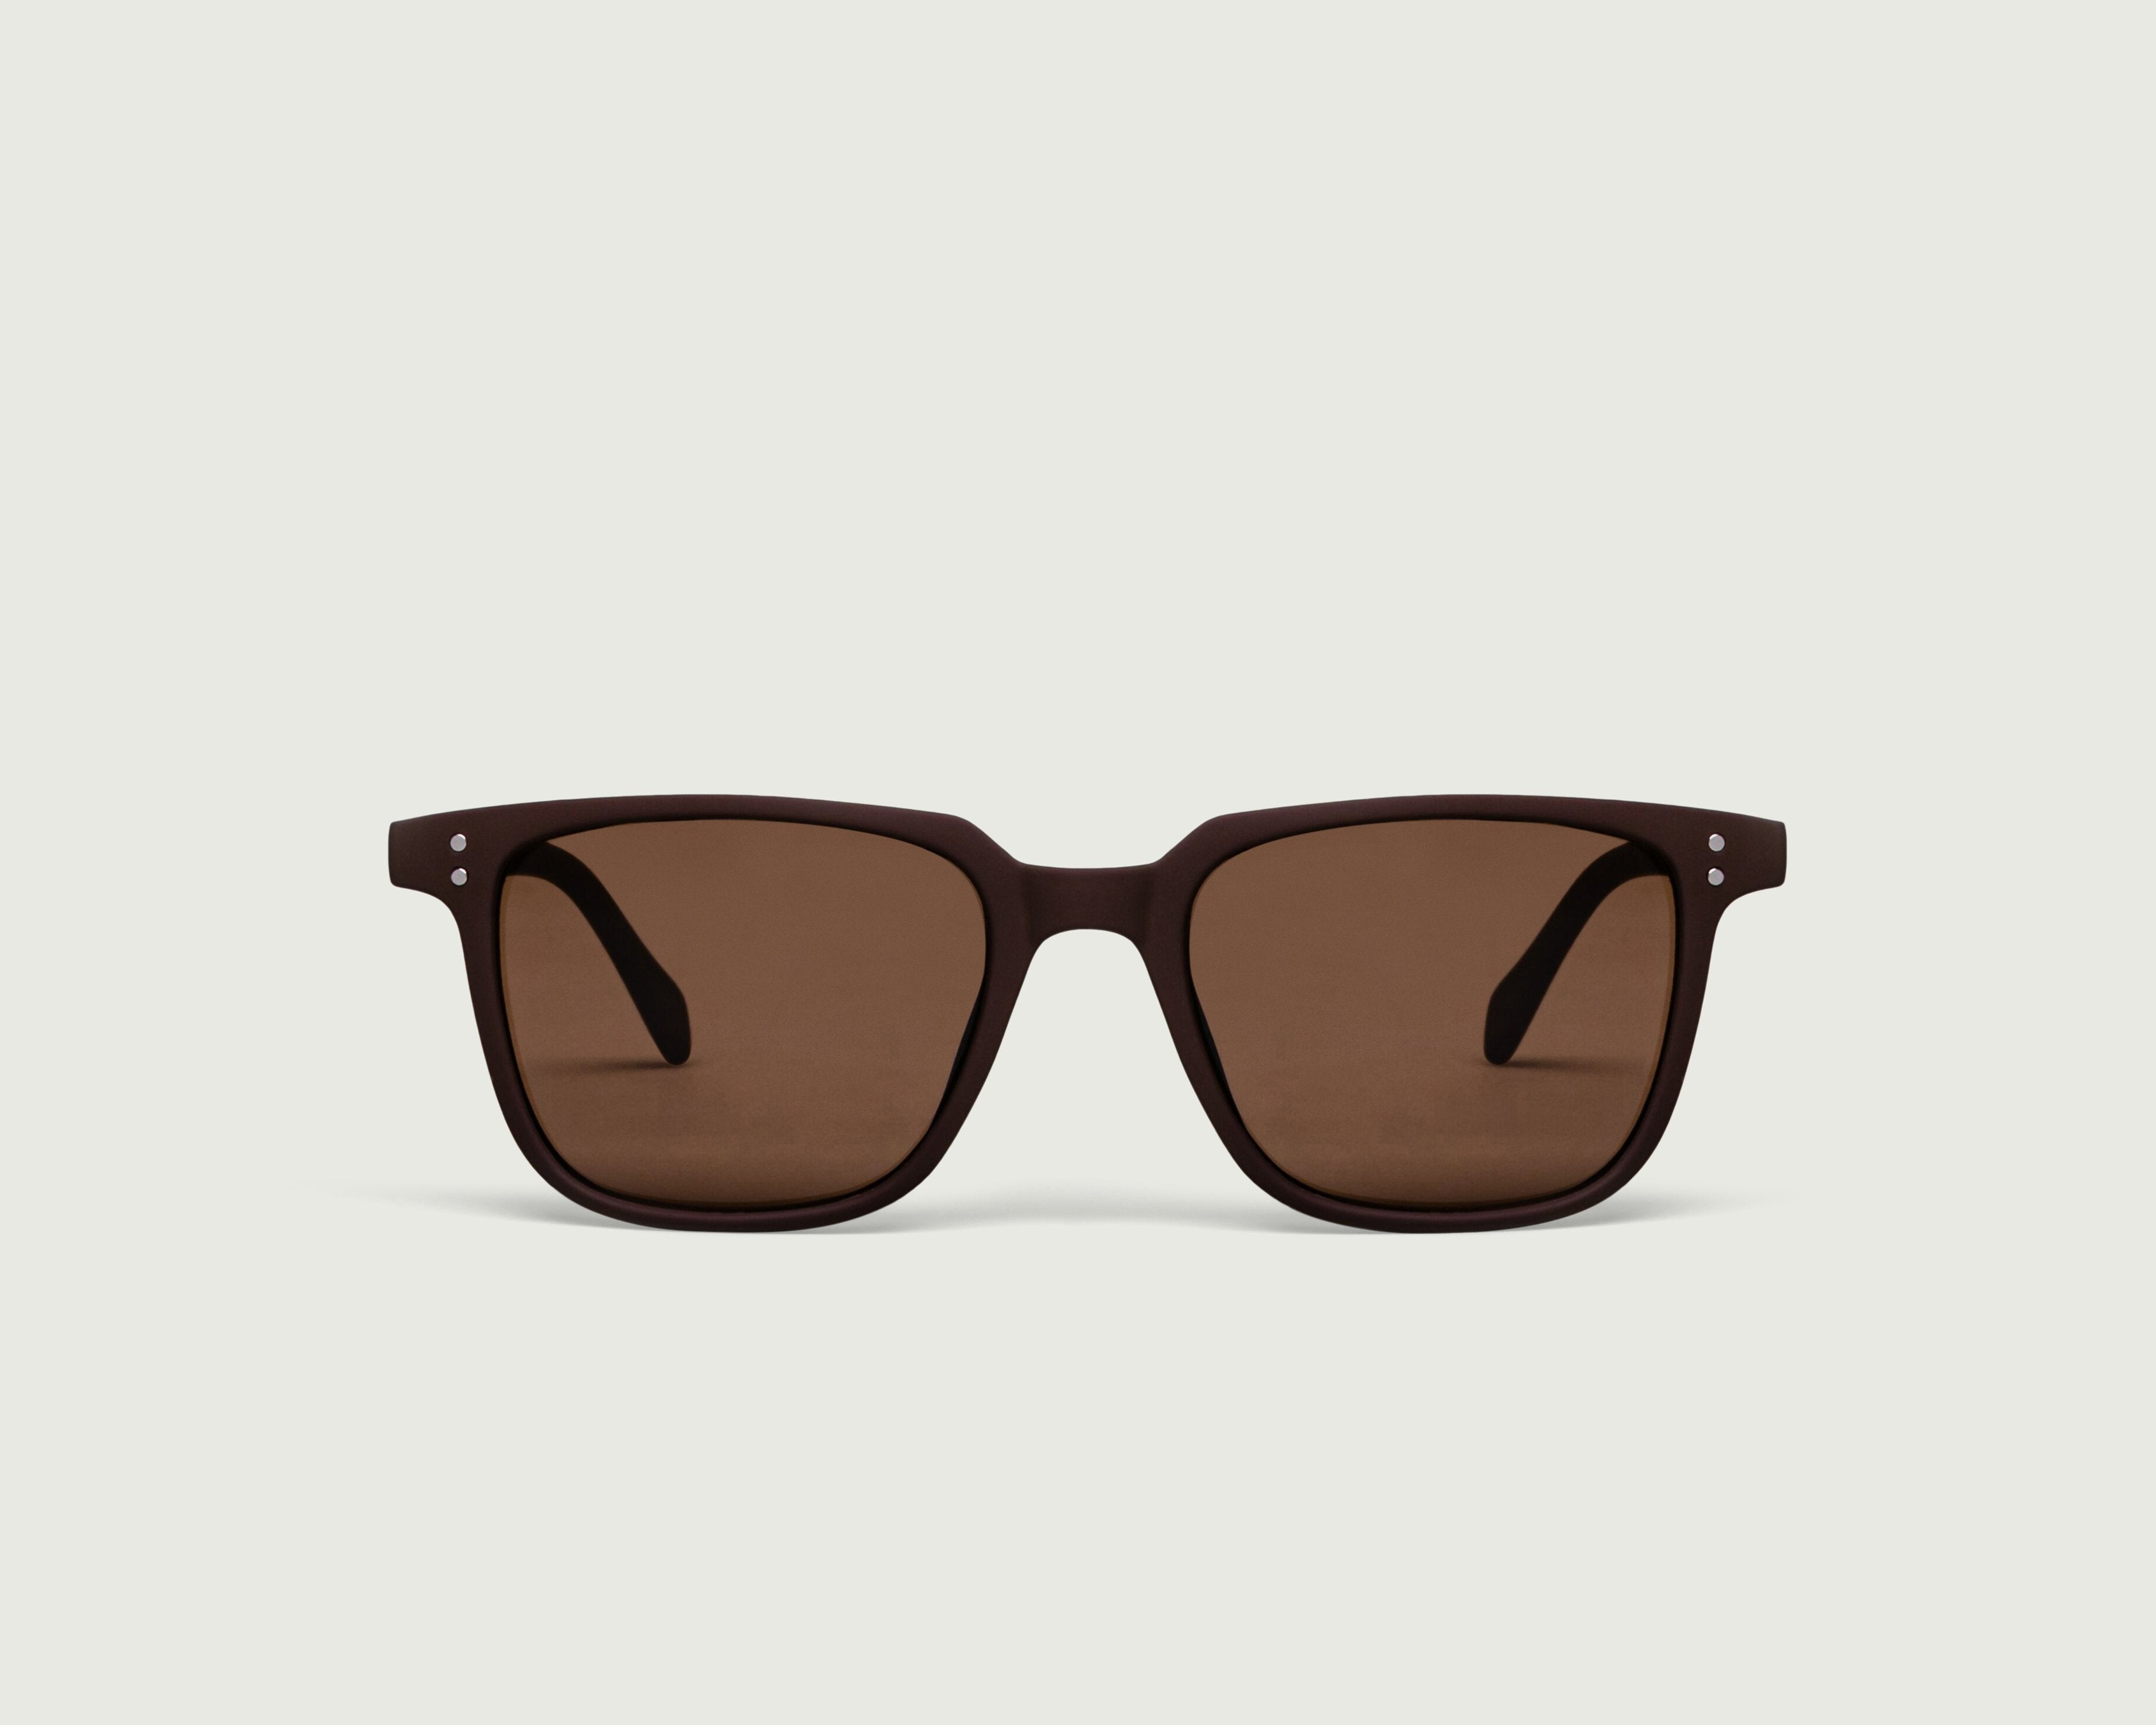 Brunette::Henrick Sunglasses square brown plastic front